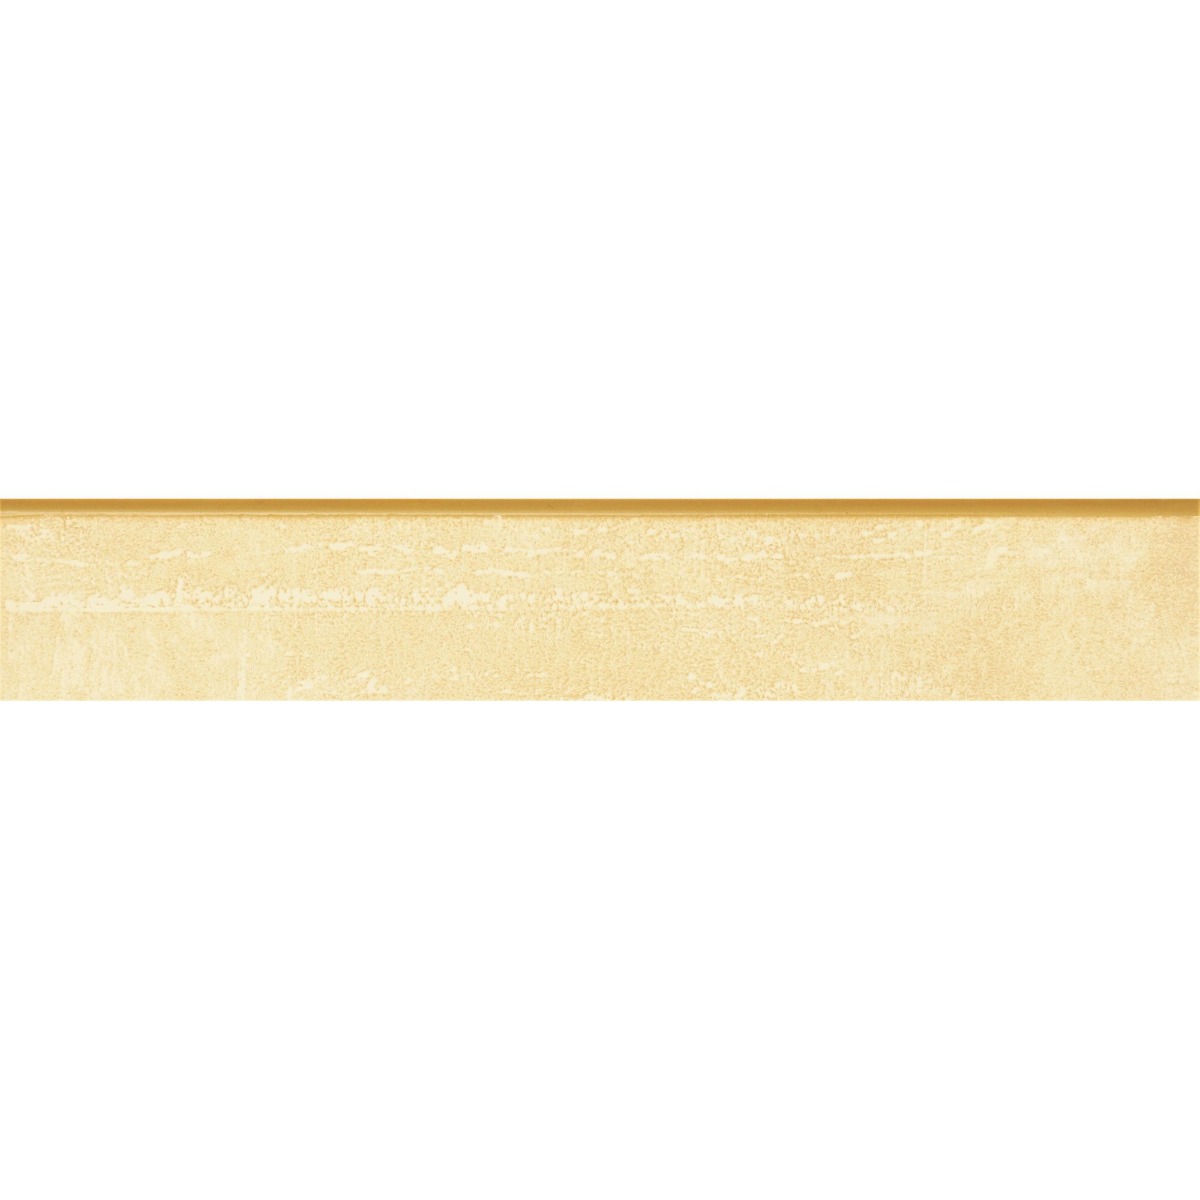 Плинтус под бетон CEMENTО ZLXF3324 7.6x60 бежевый матовый 000004488 by Zeus Ceramica (Украина) color Бежевый